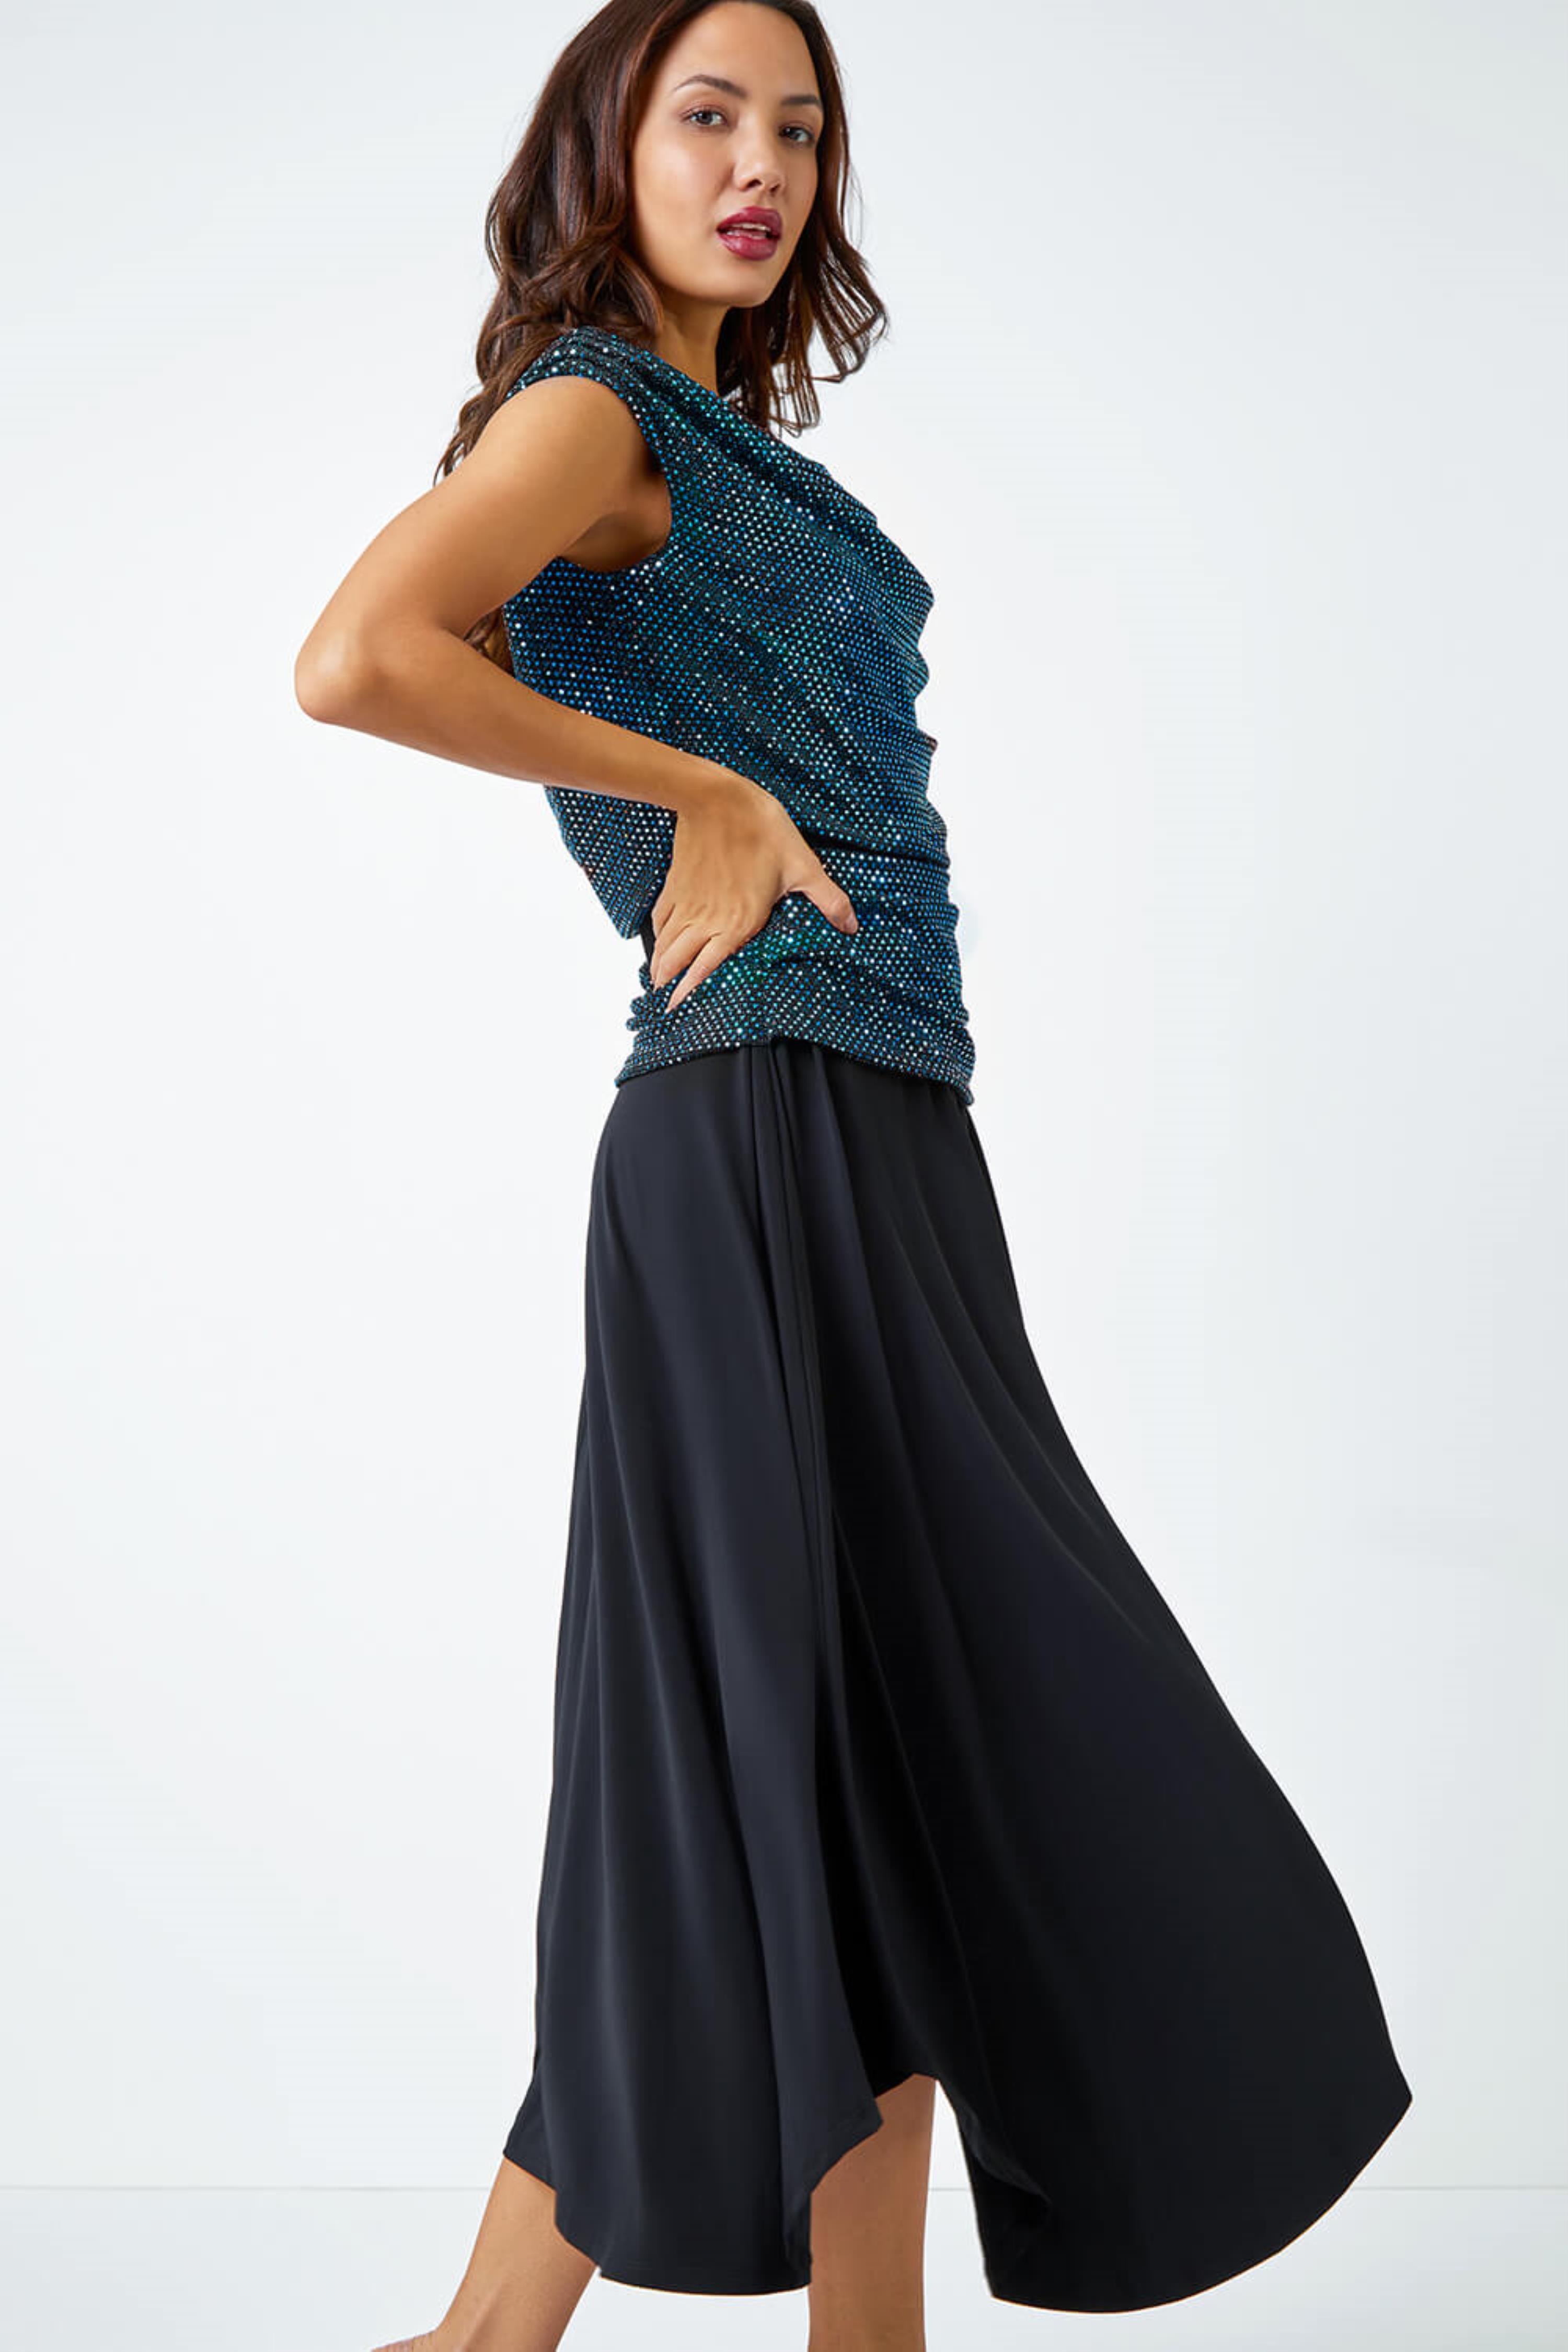 Turquoise Sequin Cowl Neck Contrast Midi Dress, Image 3 of 6